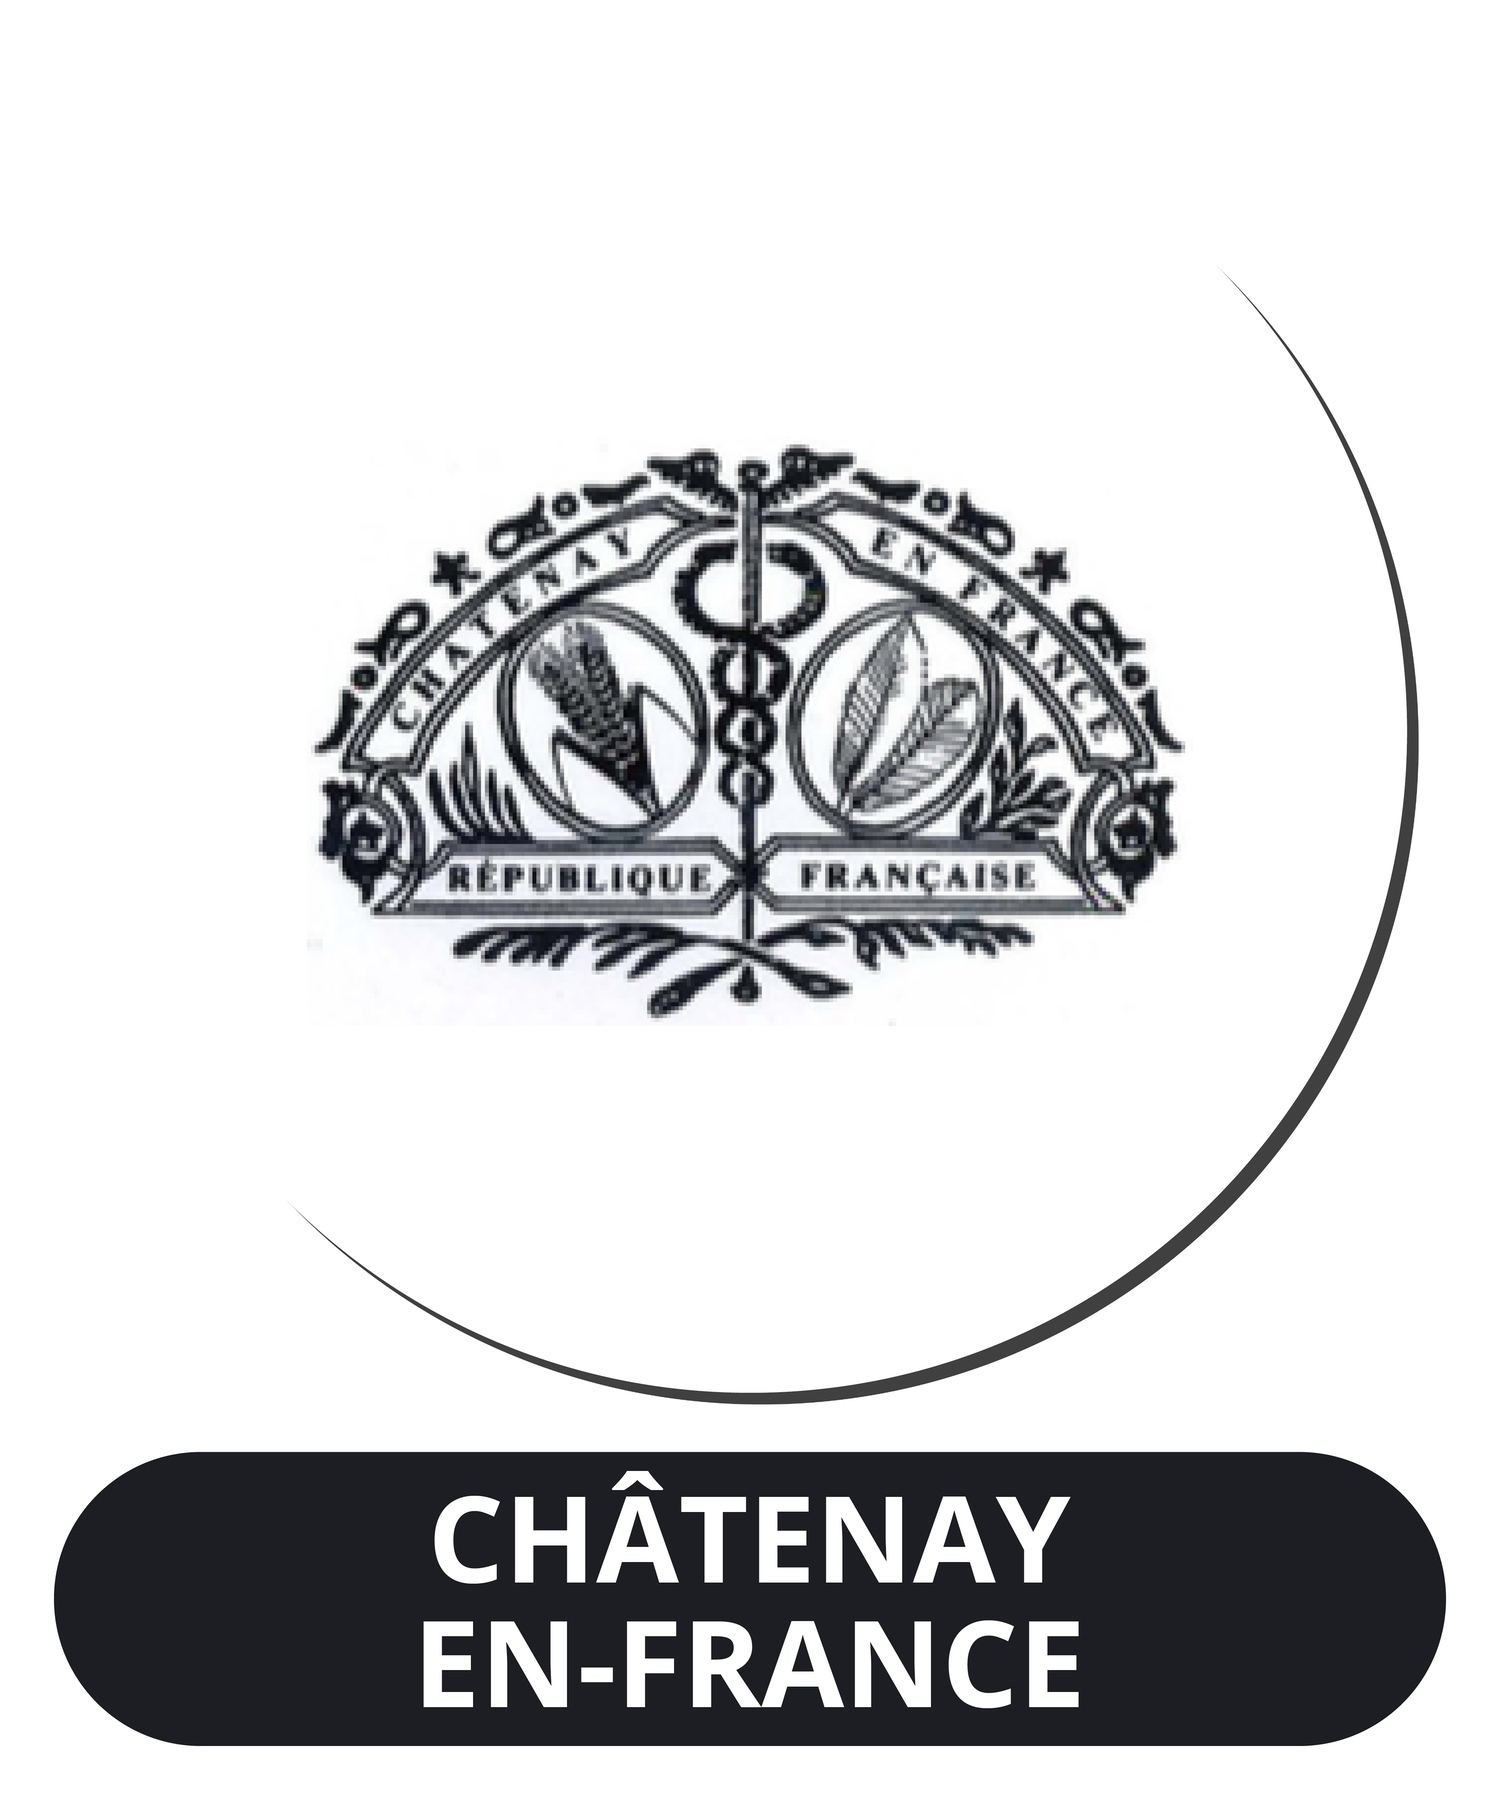 Châtenay-en-France